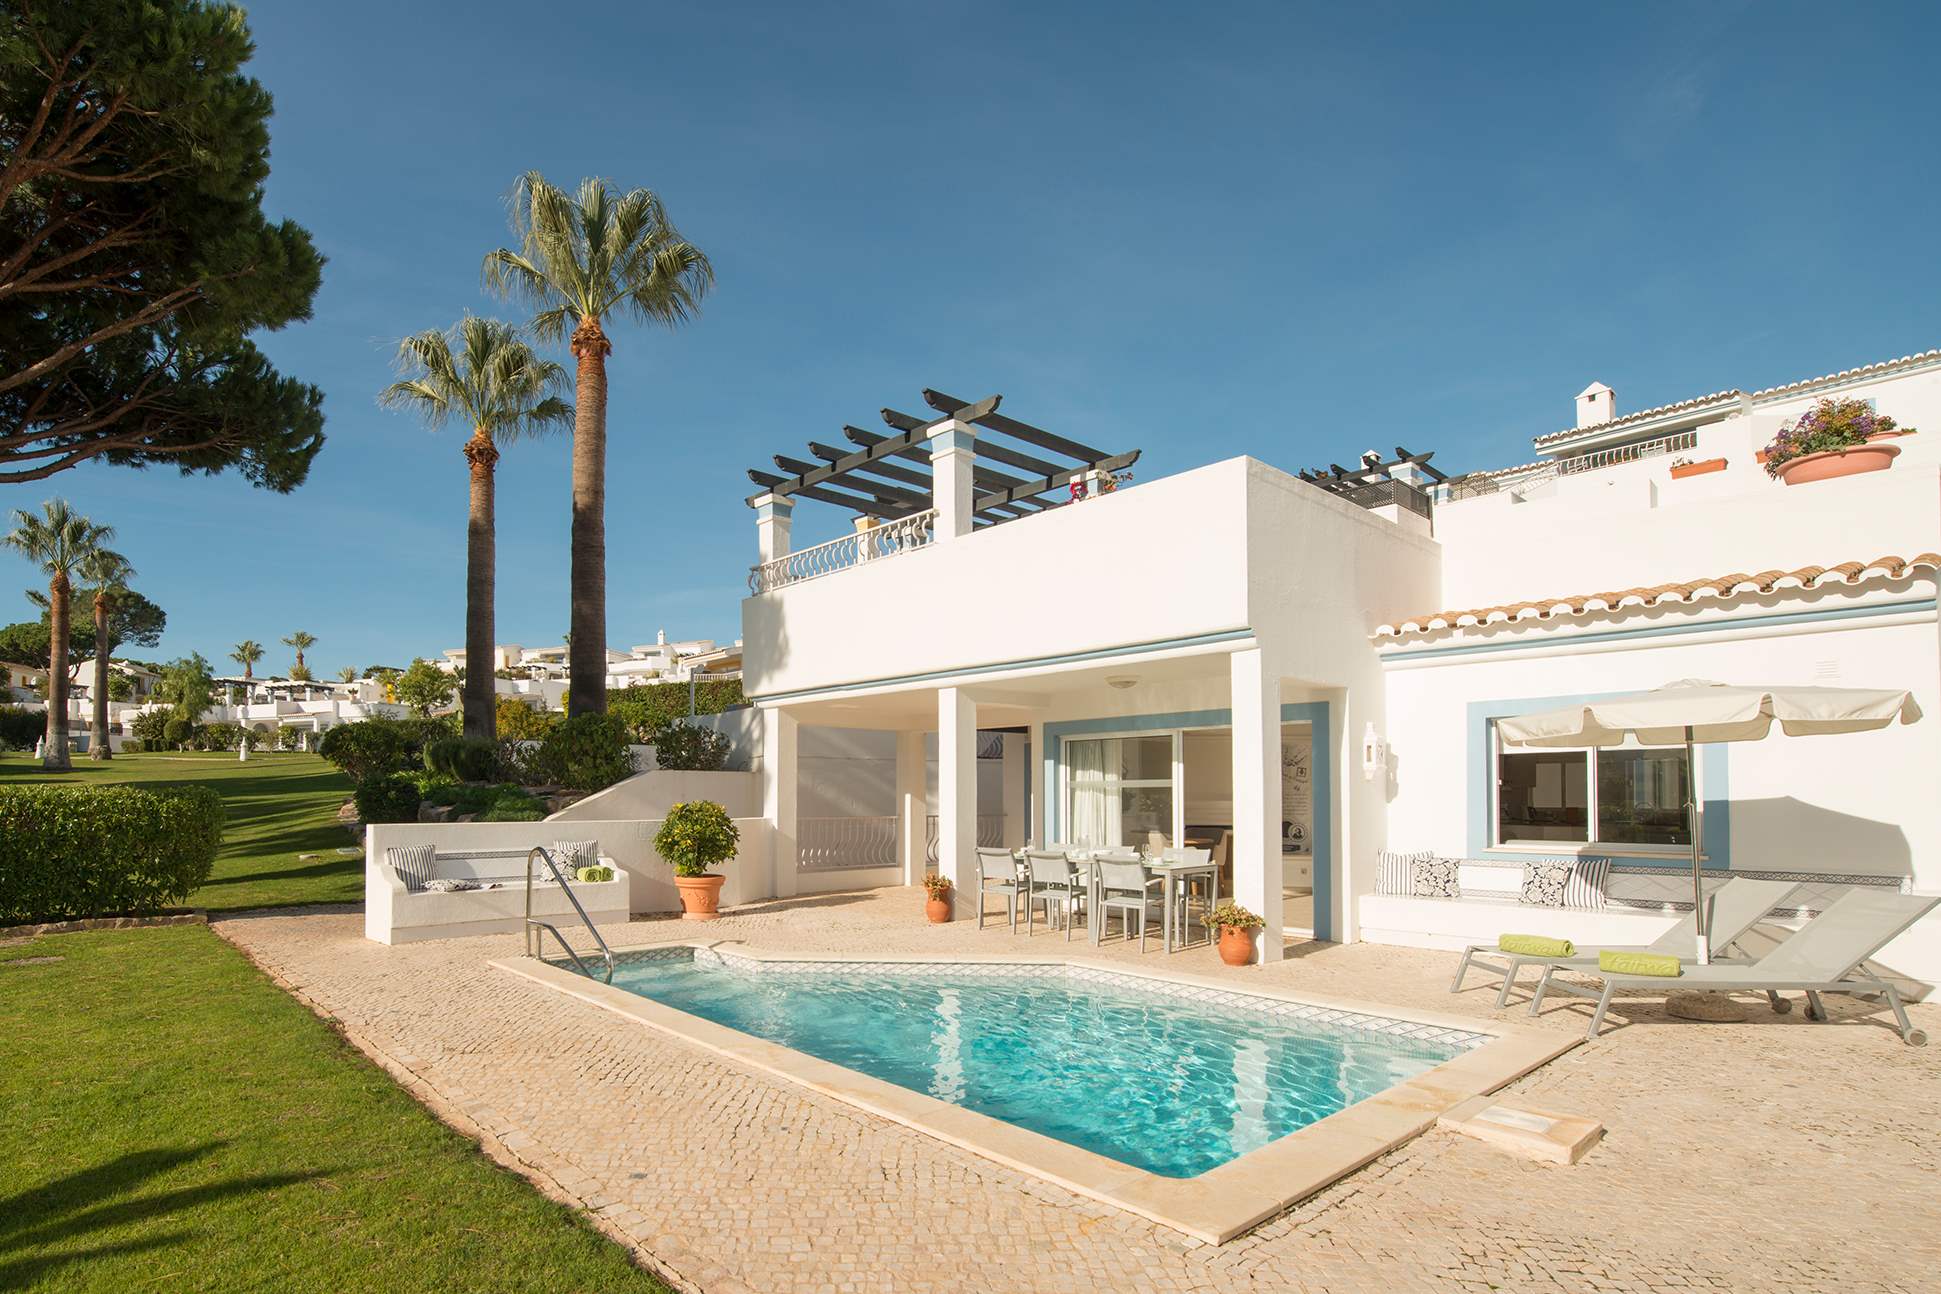 Four Seasons Fairways 3 Bed Hillside Apartment, Sunday Arrival, 3 bedroom villa in Four Seasons Fairways, Algarve